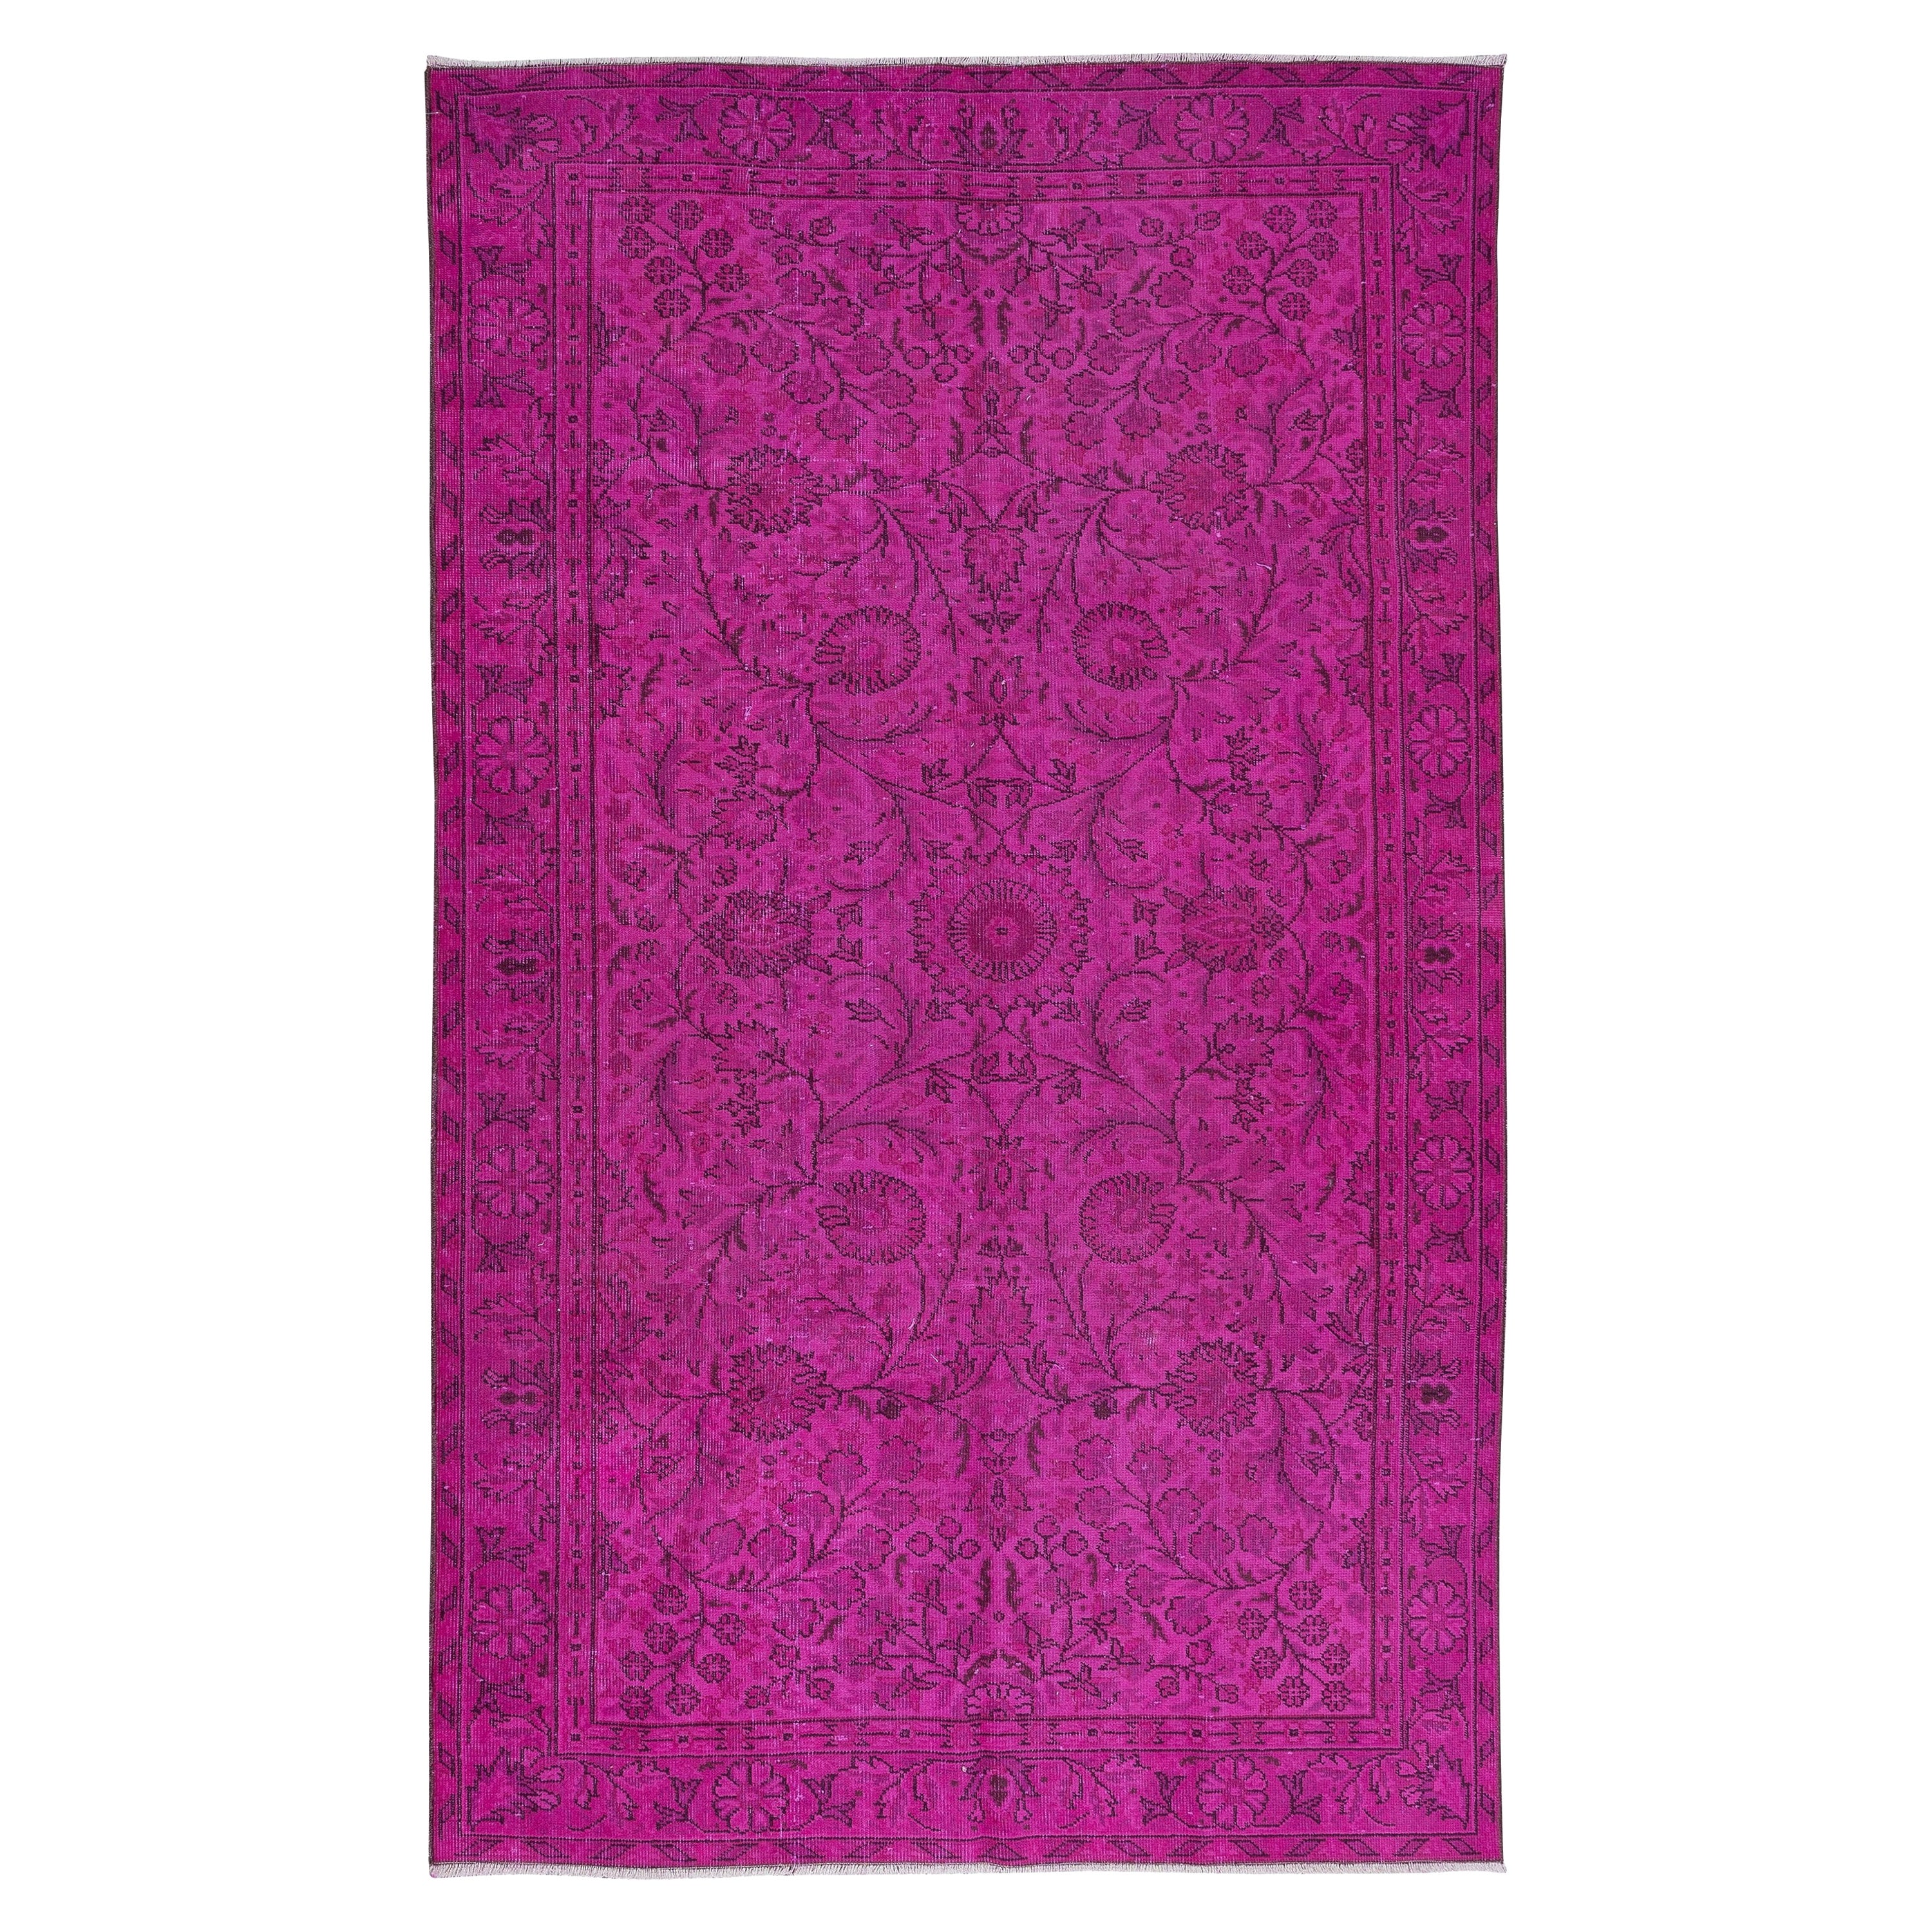 5.3x8.7 Ft Modern Handmade Turkish Vivid Hot Pink Rug with Flower Design For Sale